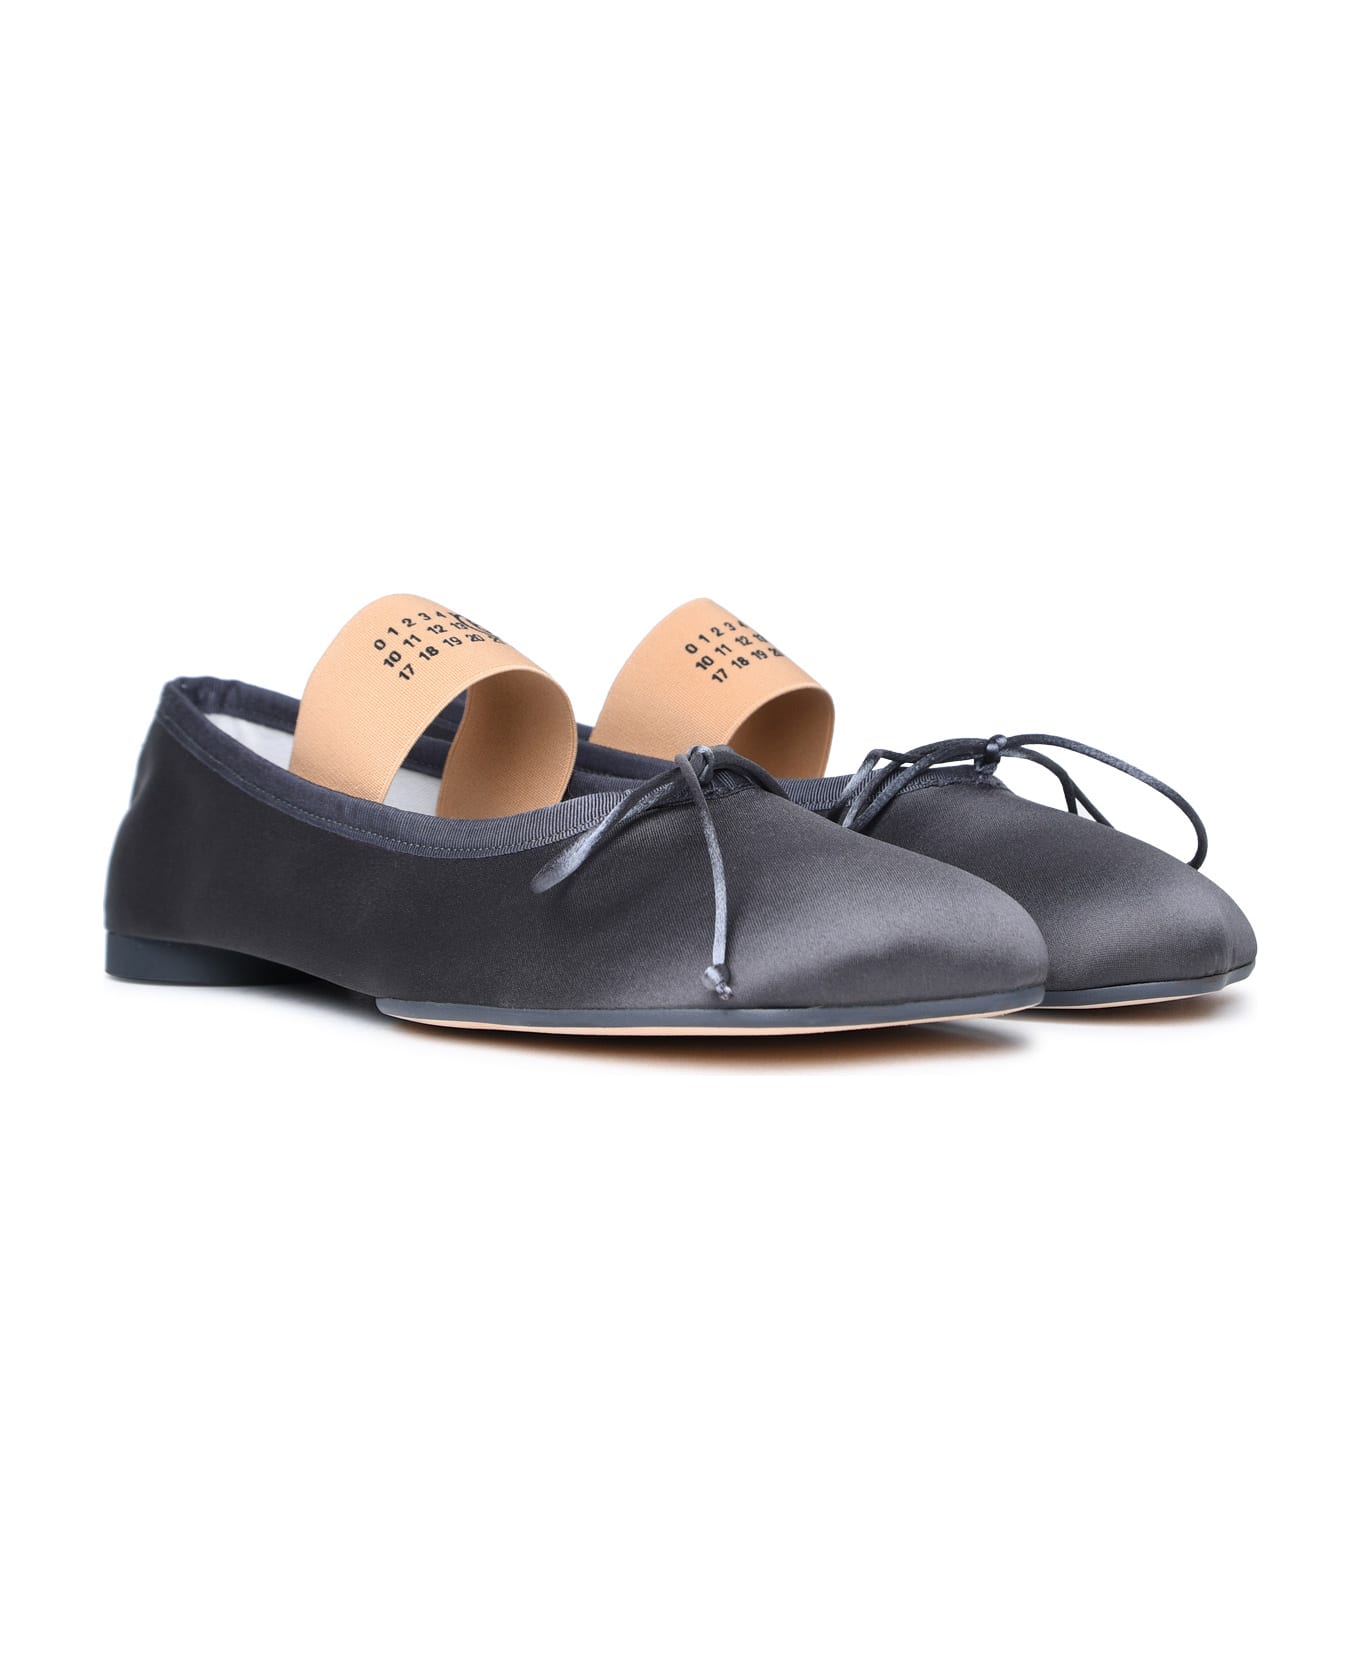 MM6 Maison Margiela Grey Polyester Ballet Flats - Grey フラットシューズ